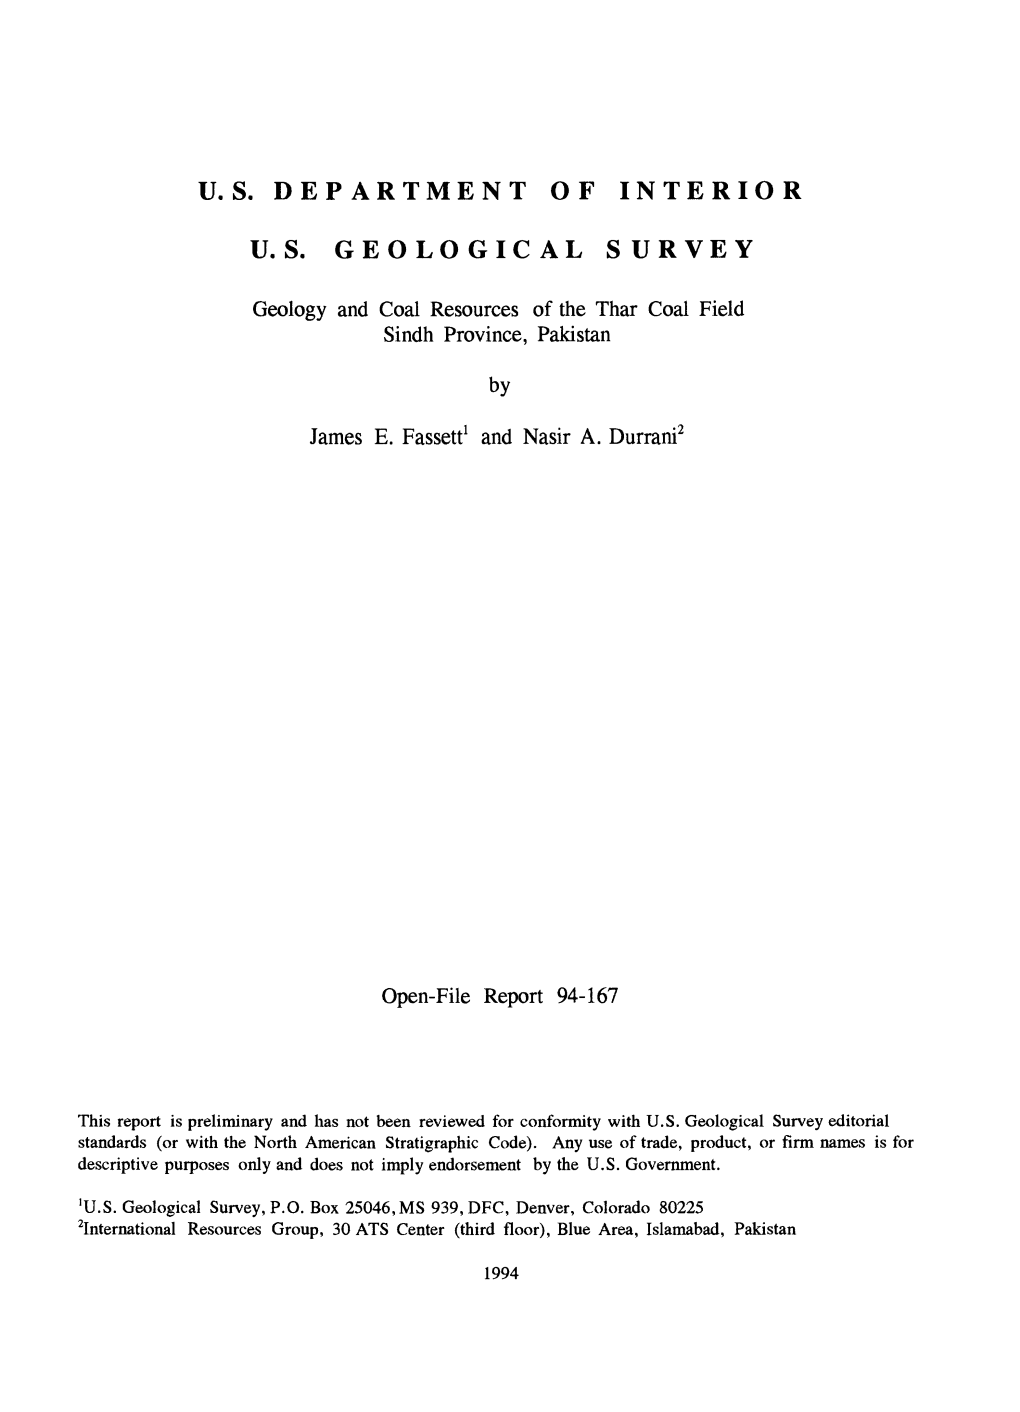 U.S. Department of Interior U. S. Geological Survey